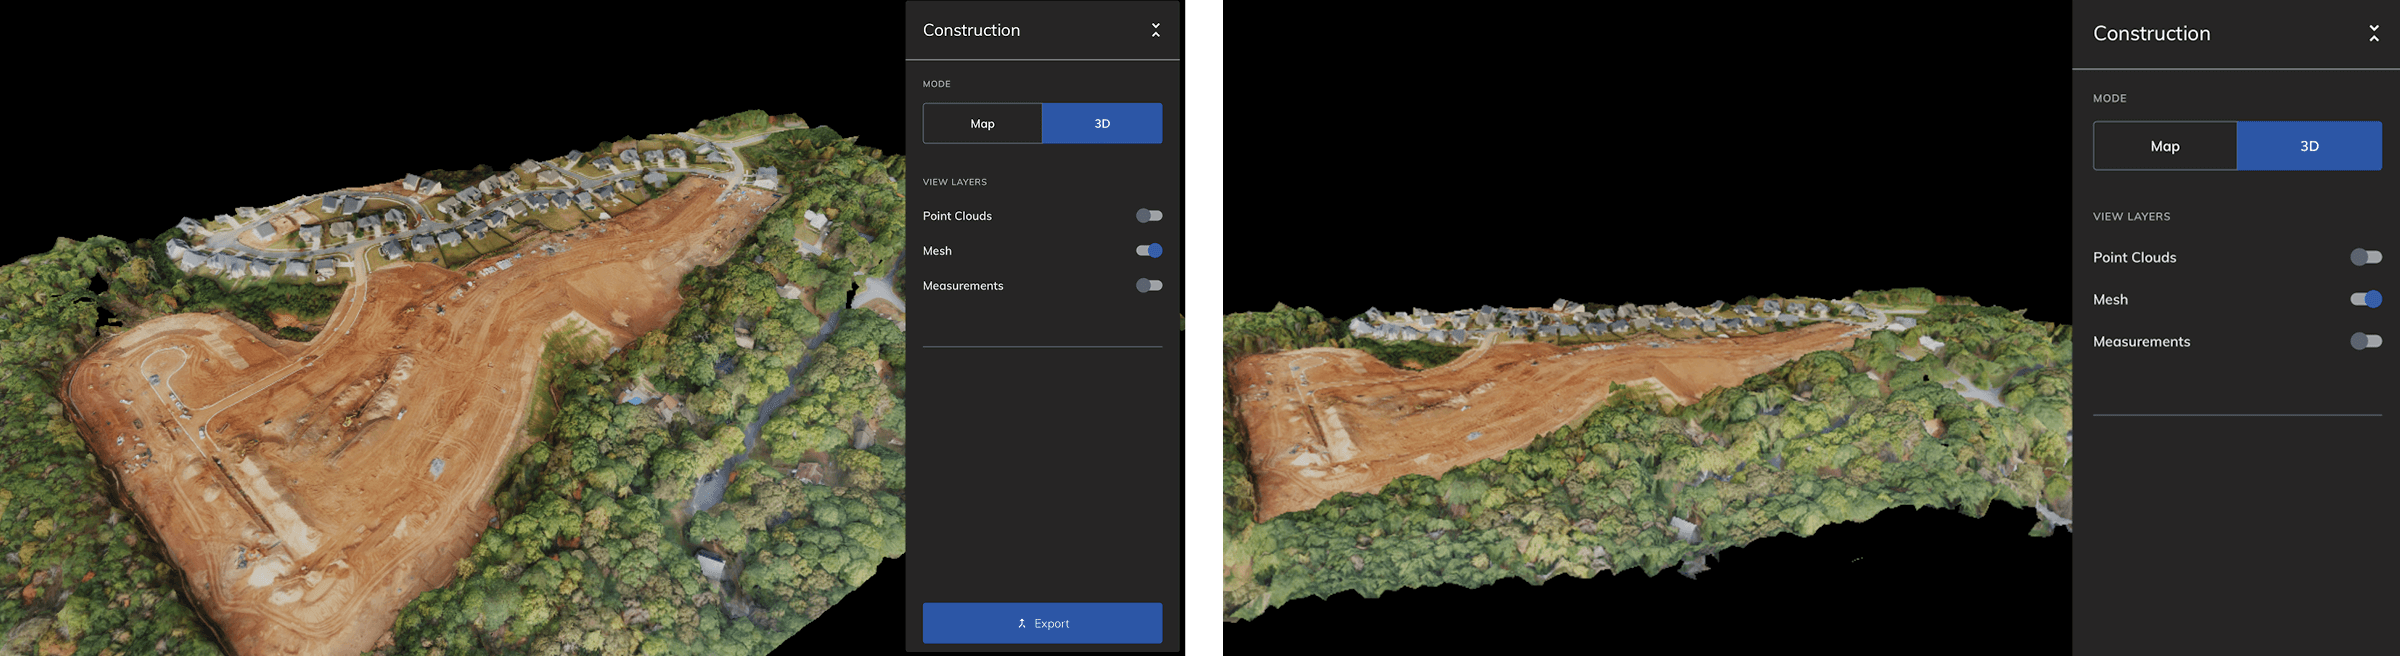 screenshot of construction drone orthophoto in Mapware